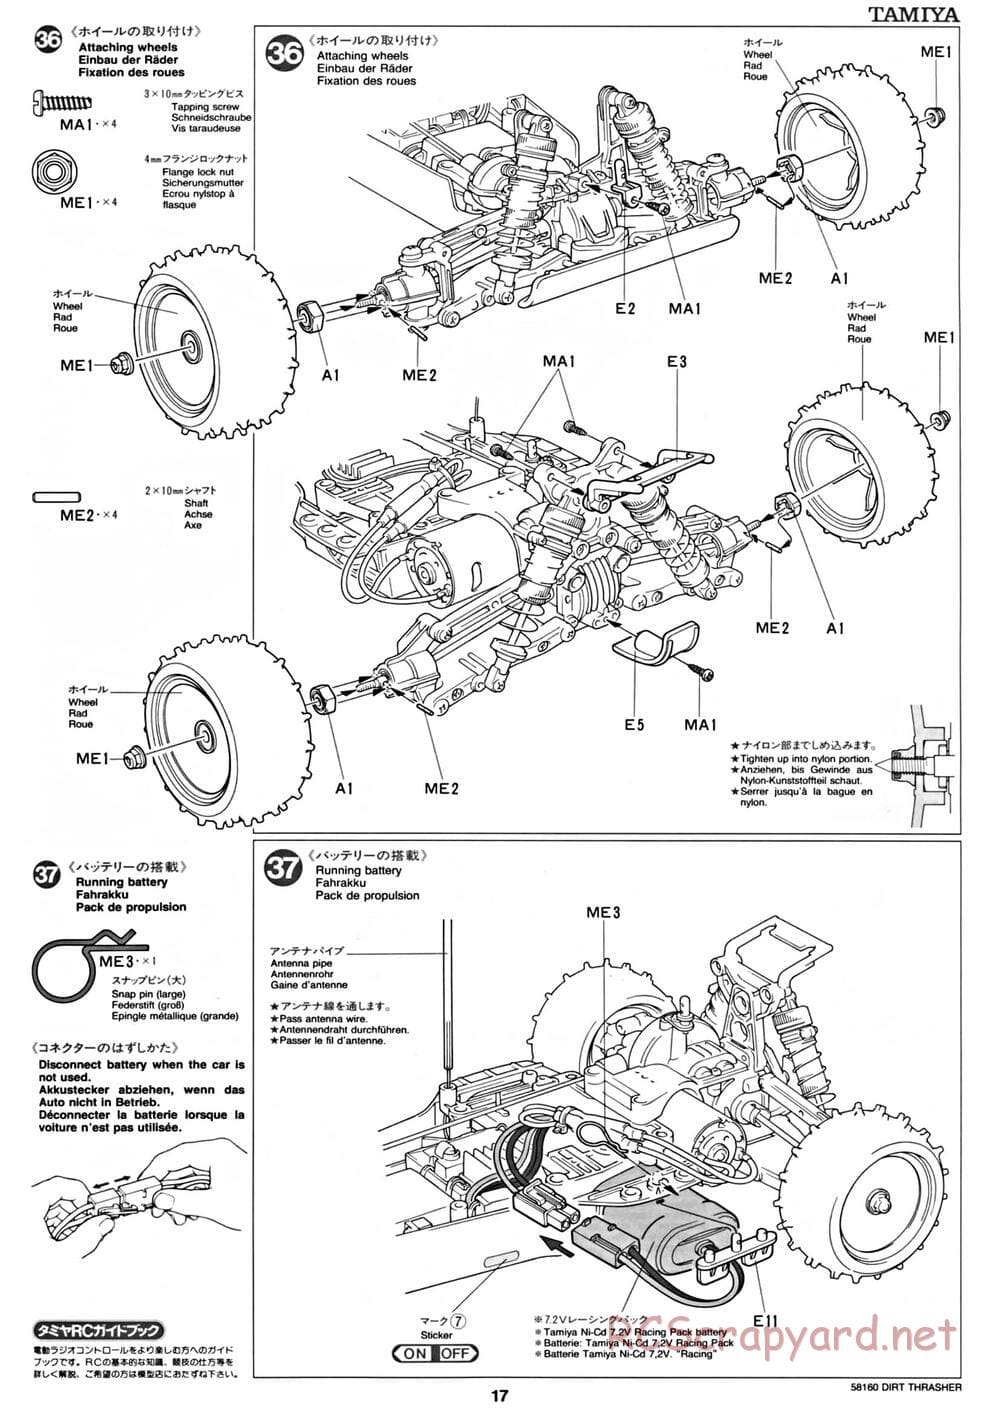 Tamiya - Dirt Thrasher Chassis - Manual - Page 17